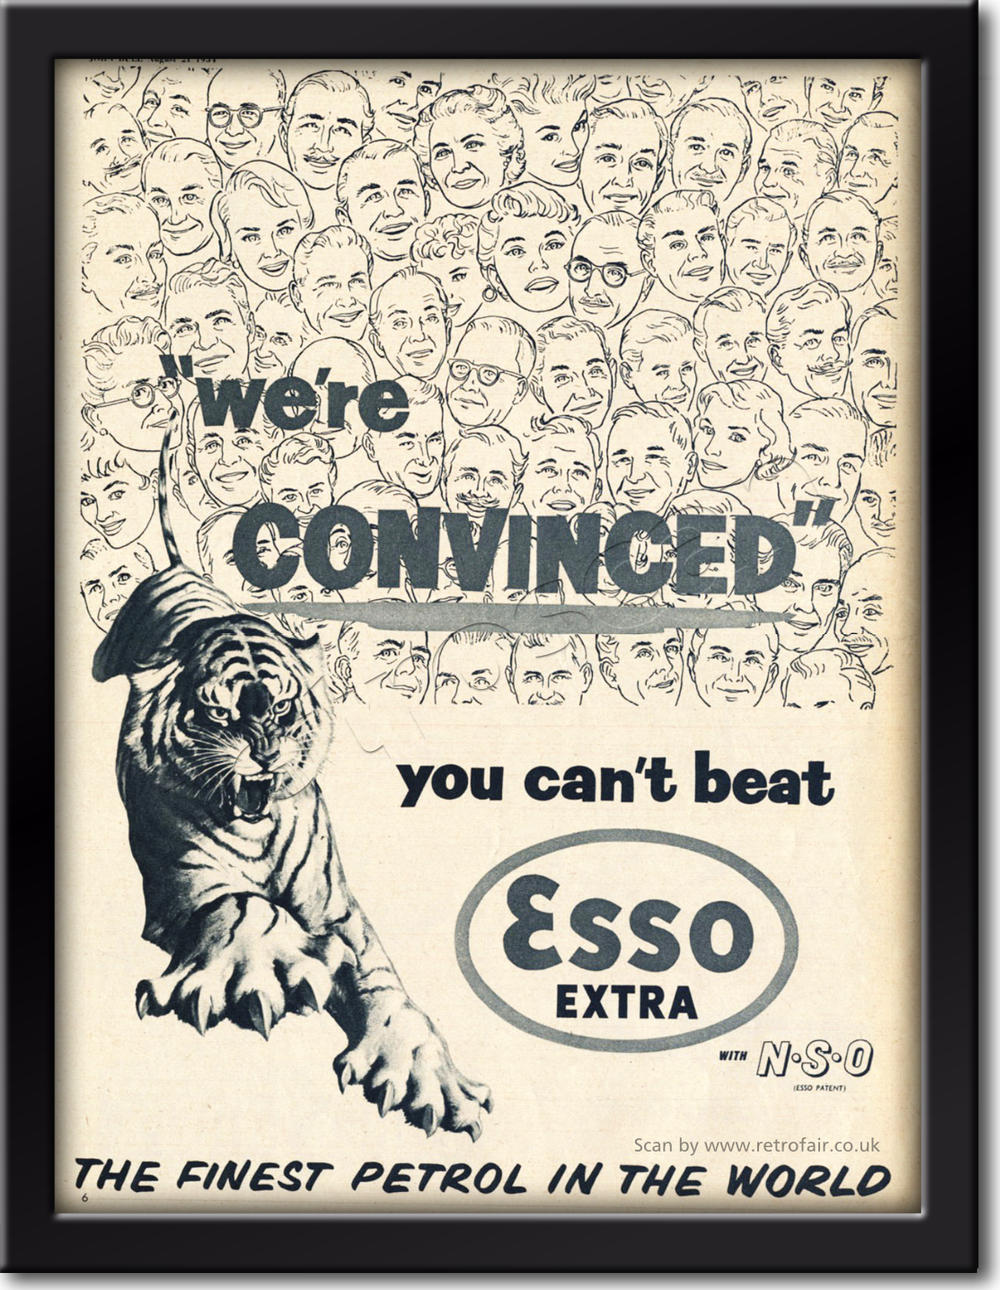 1954 vintage Esso Extra advert